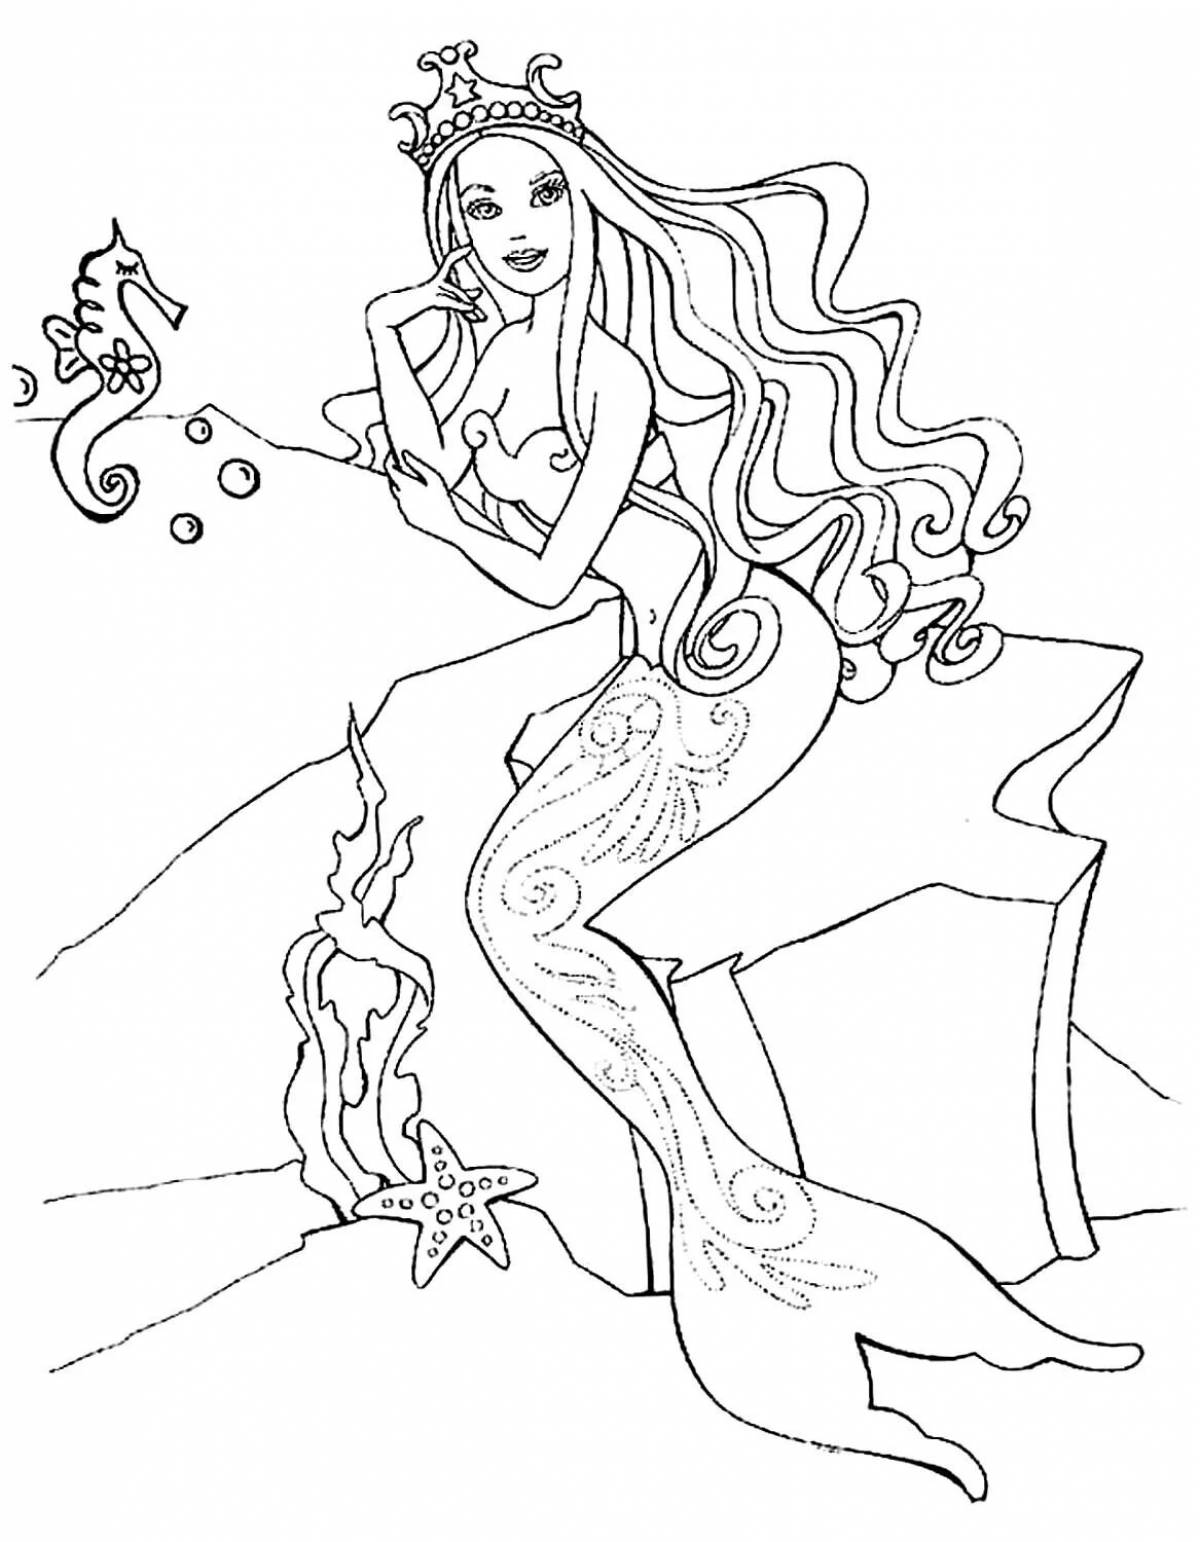 Coloring page dazzling mermaid queen